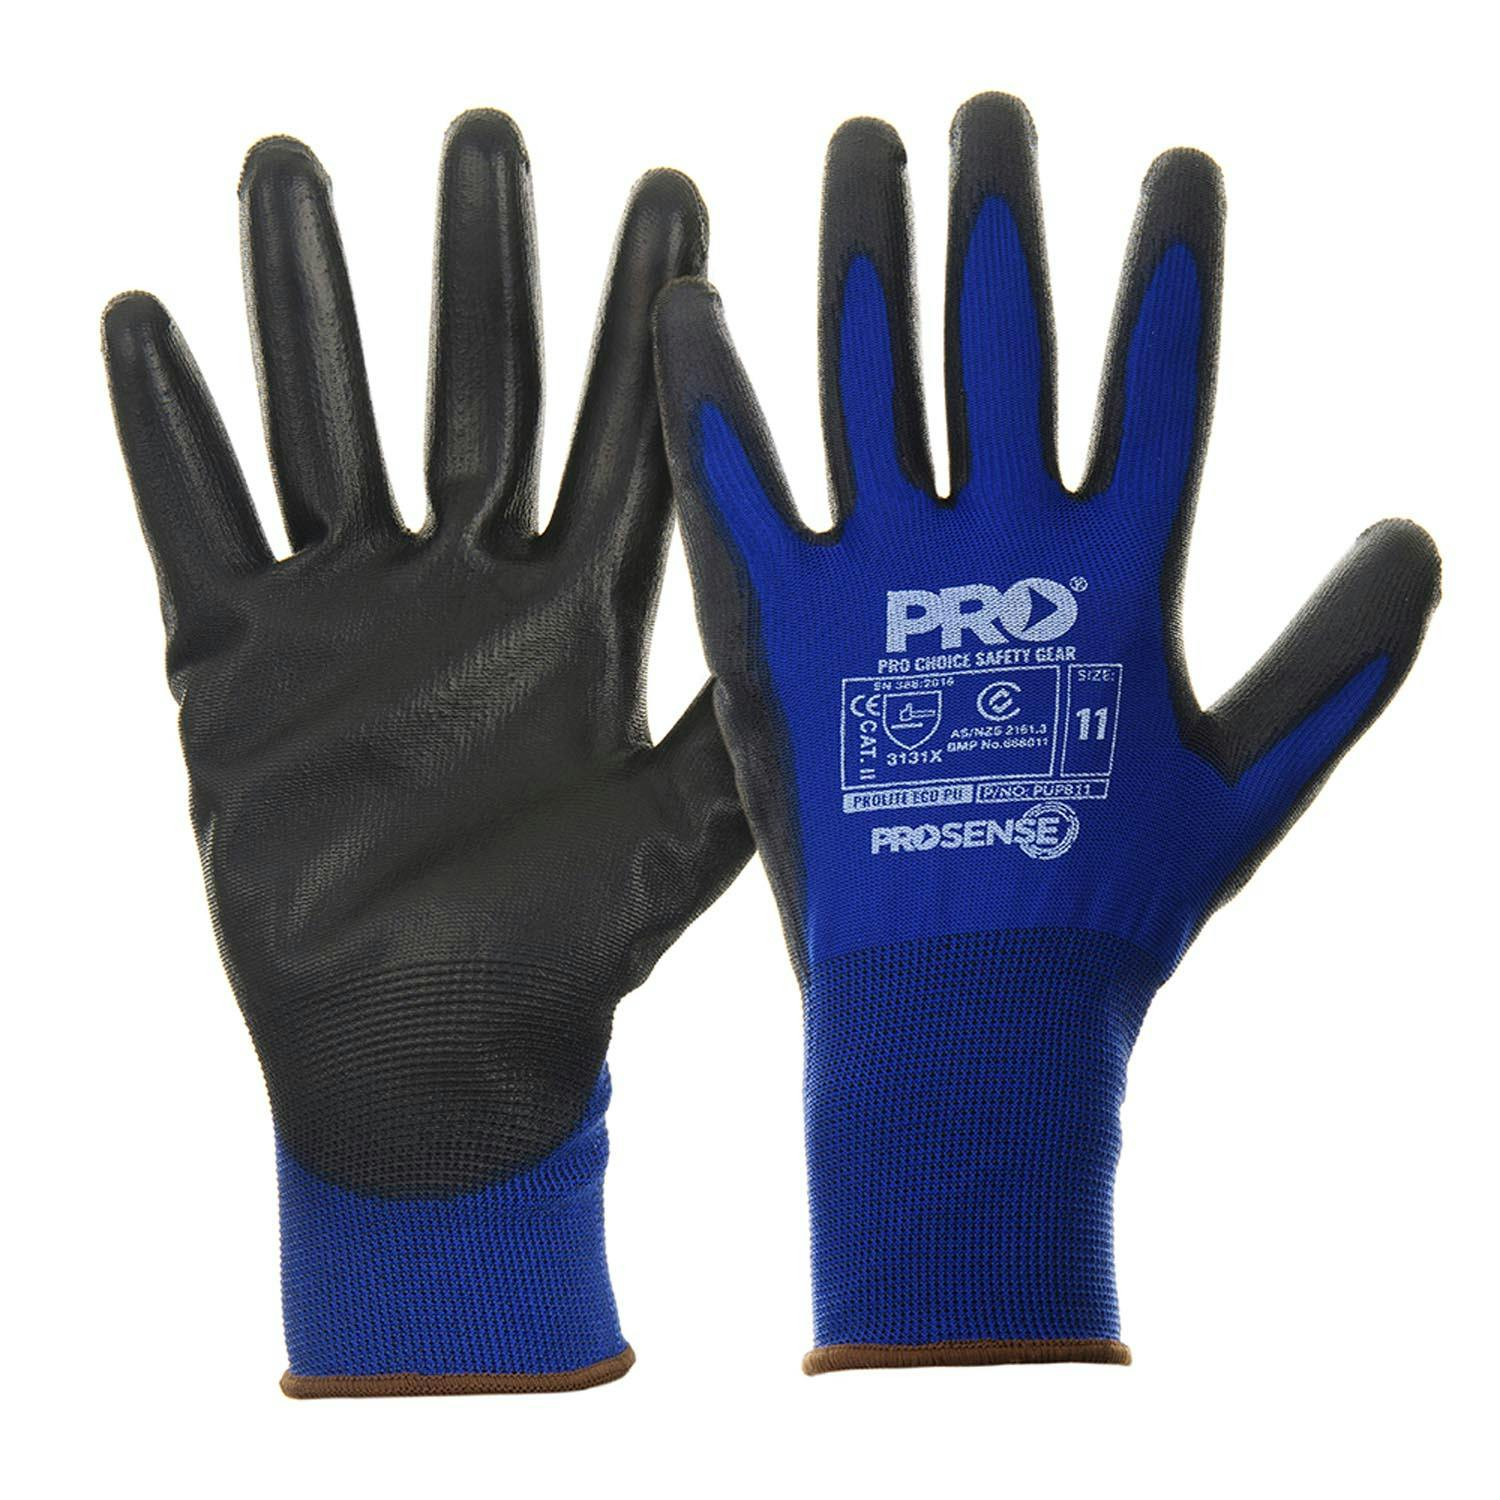 Pro Choice Prosense Prolite Eco Pu Glove 12Pr Bulk Pack_0